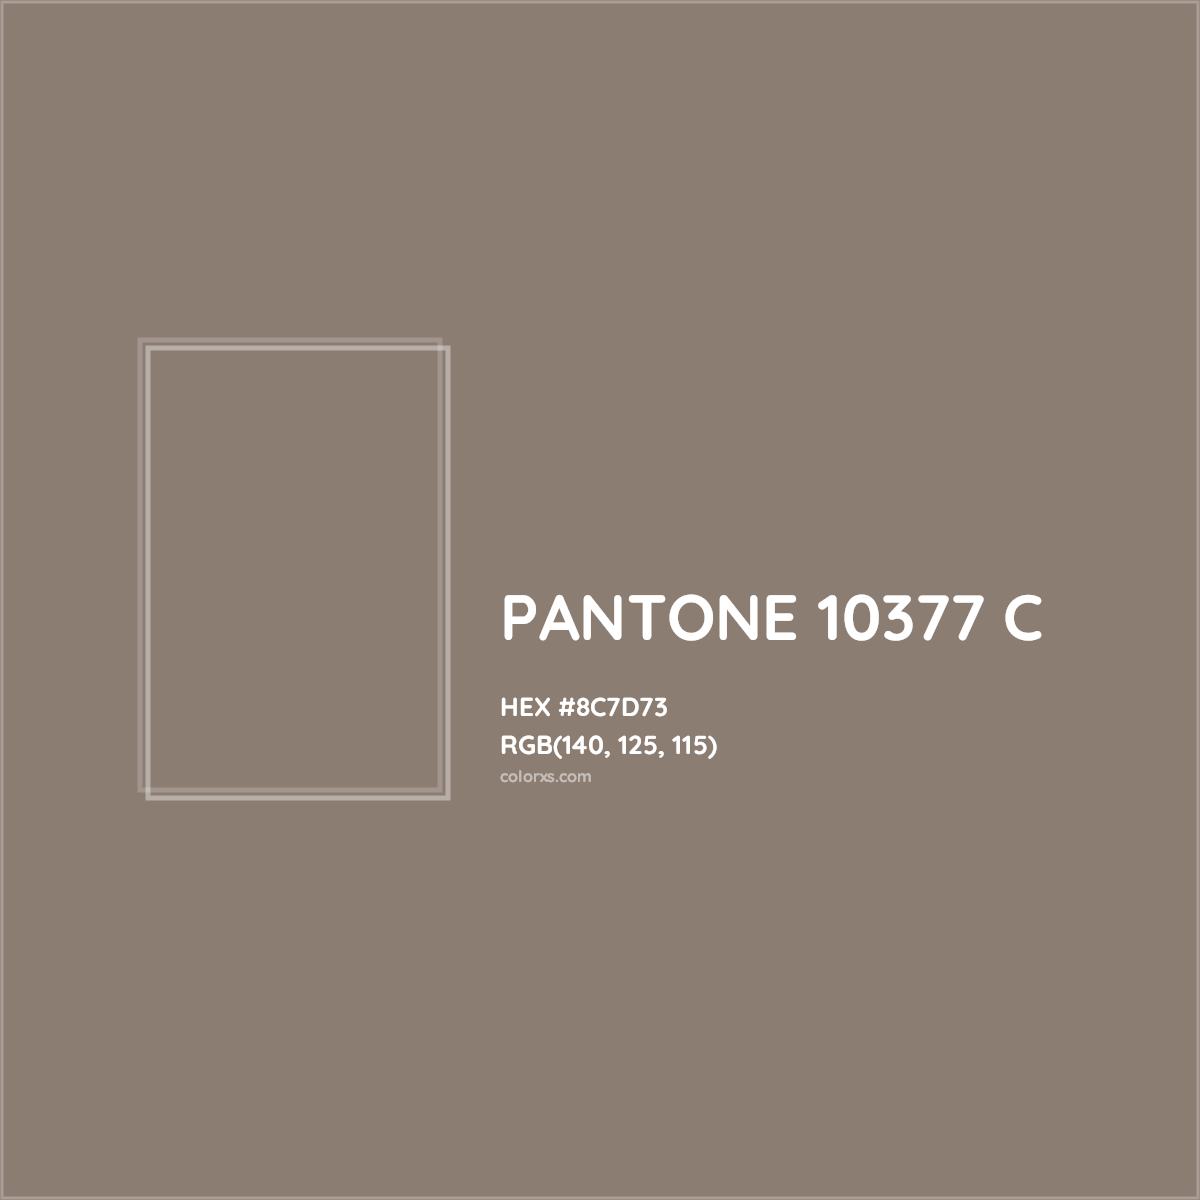 HEX #8C7D73 PANTONE 10377 C CMS Pantone PMS - Color Code